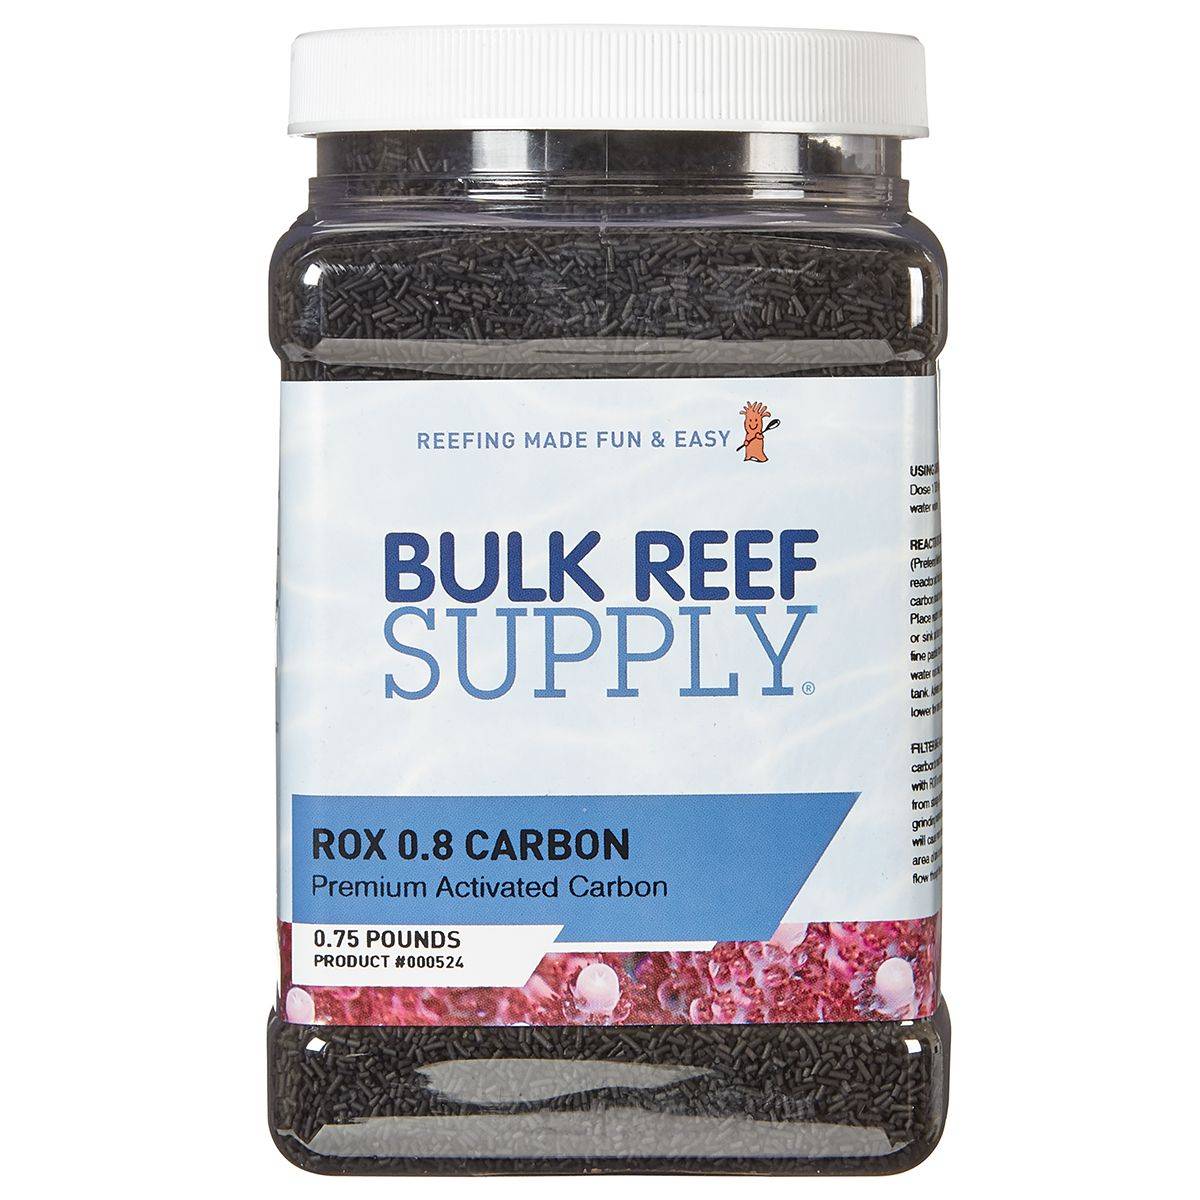 1/2 Gallon Bulk Premium ROX 0.8 Carbon - Bulk Reef Supply